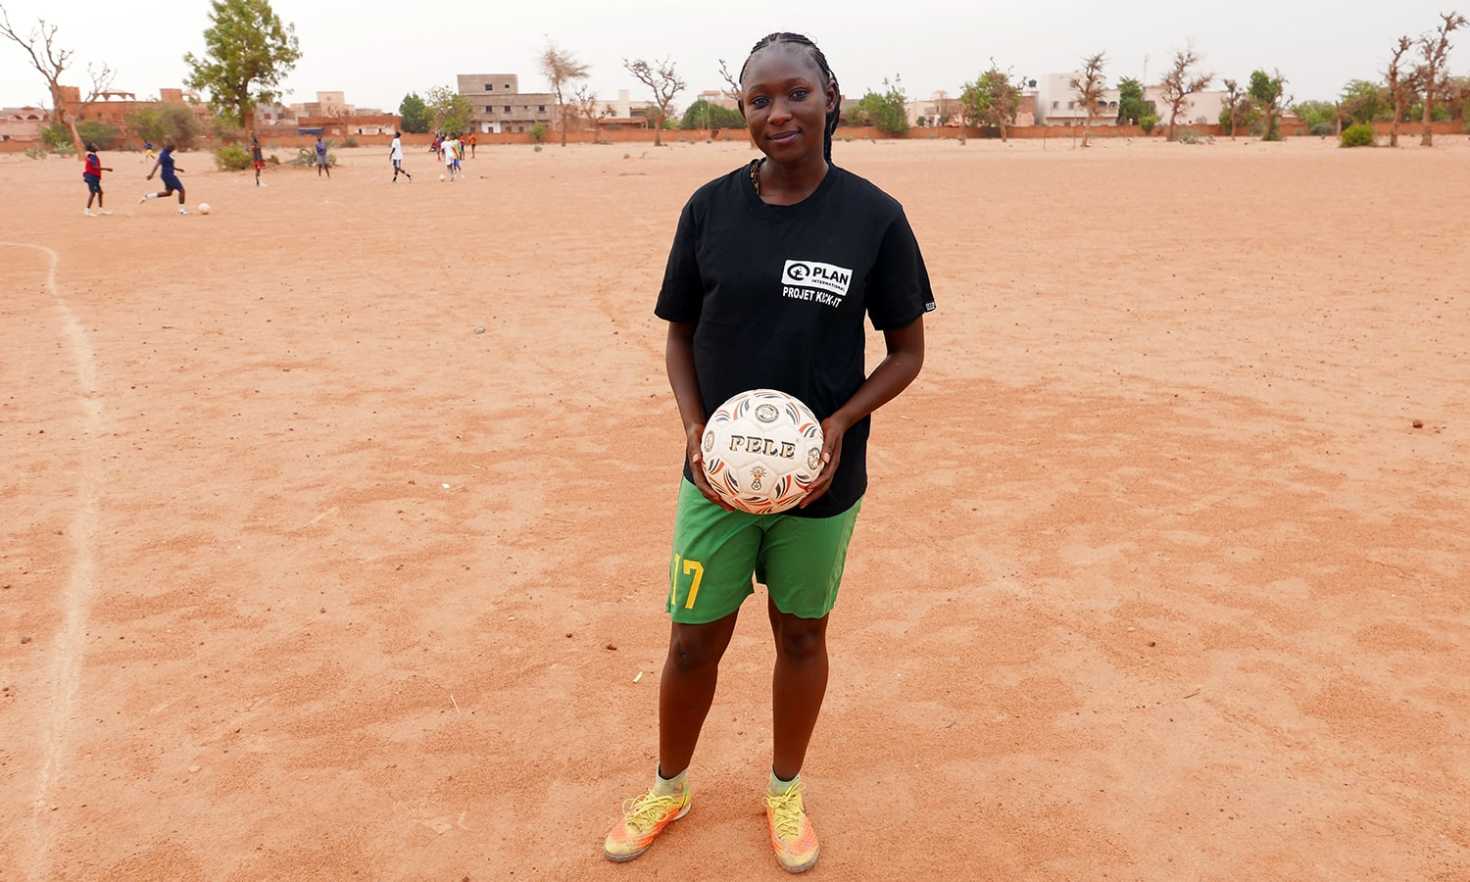 Bernadette coaches an all-female football team in Mali